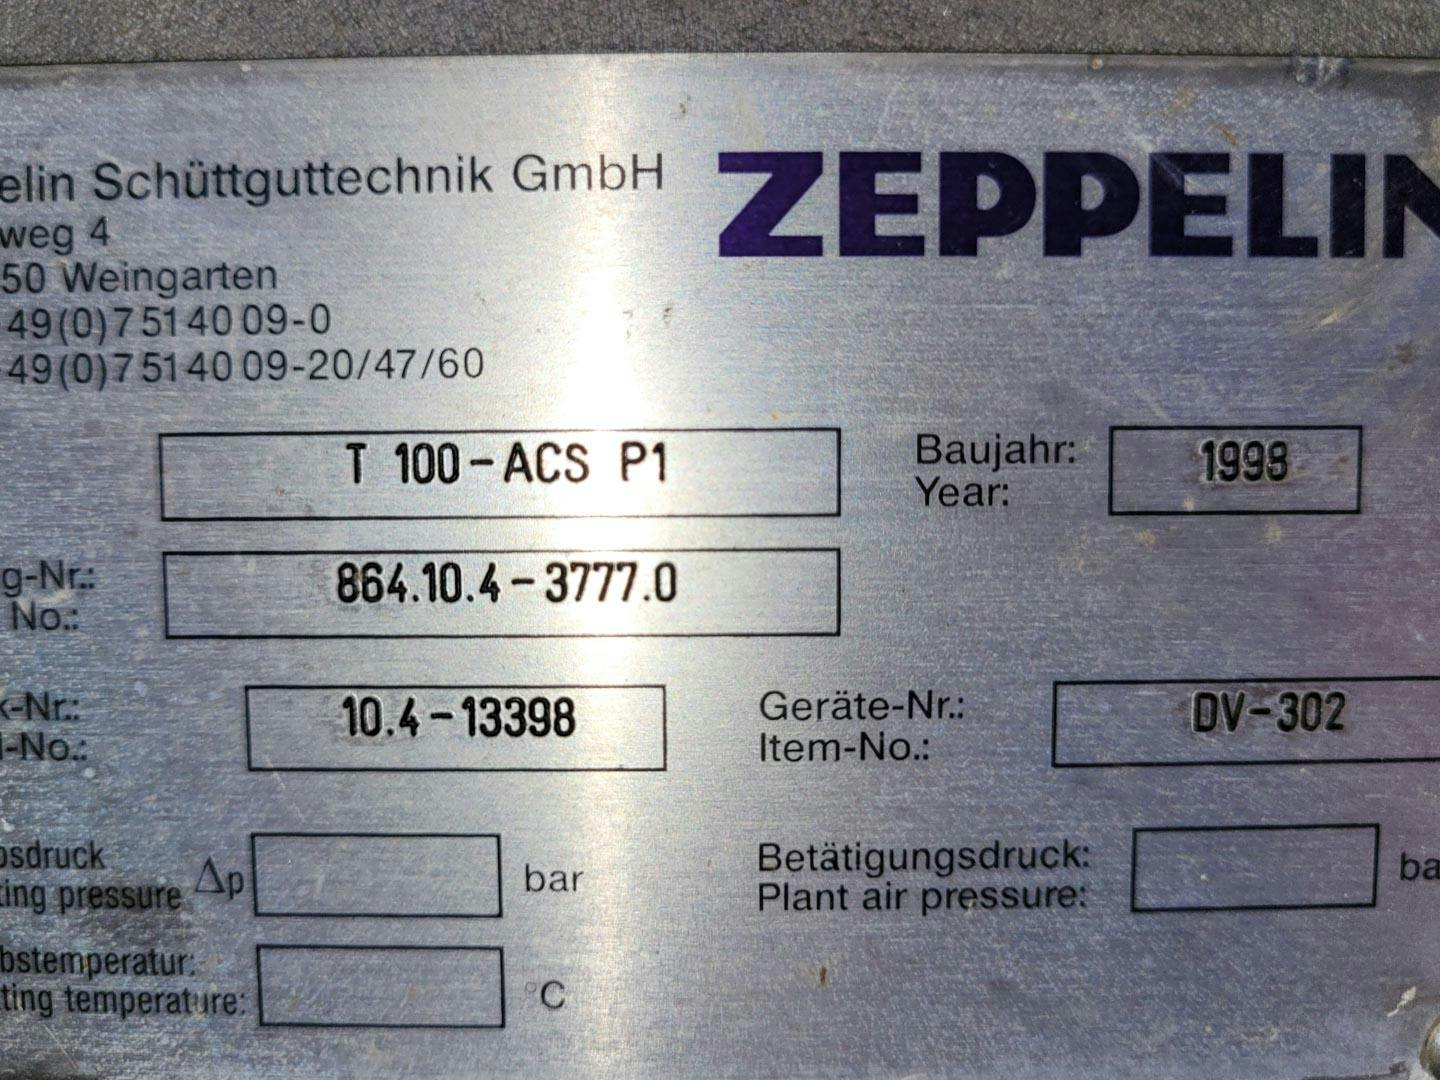 Zeppelin T-100-ACS P1 - Diverter valve - image 4